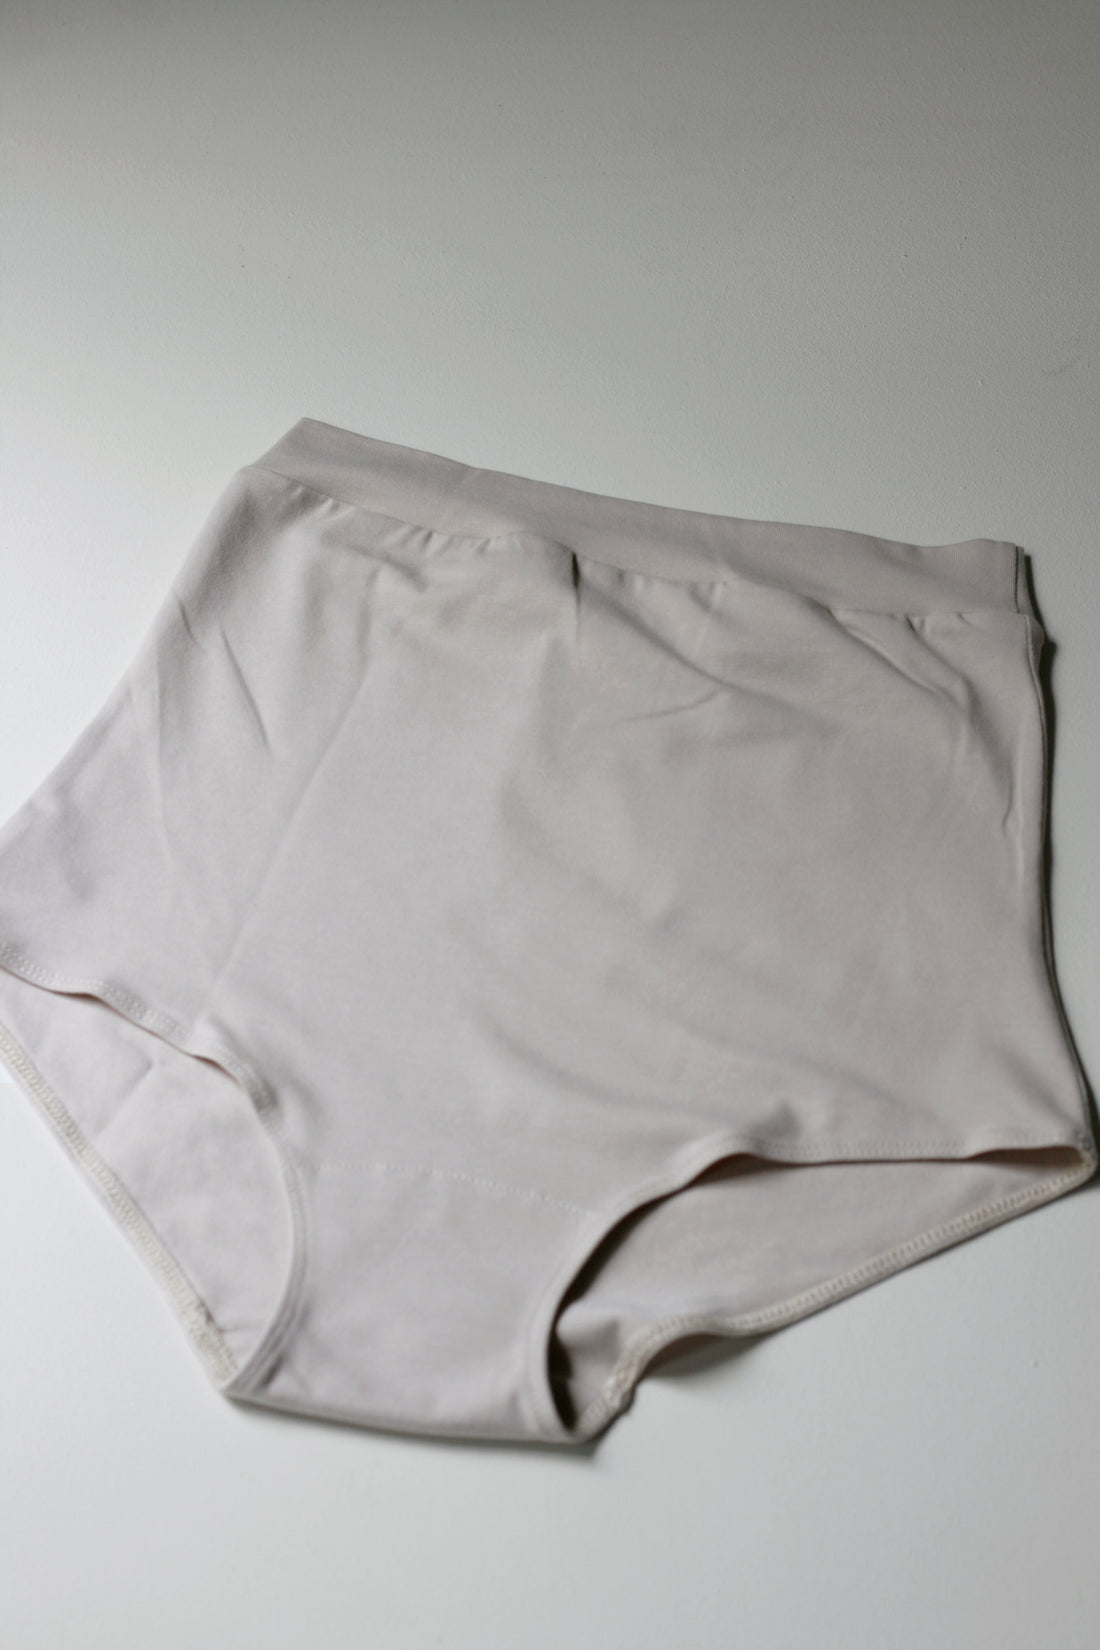 Huilaibazo High Waist Underwear For Women, 4 Pack Full Coverage